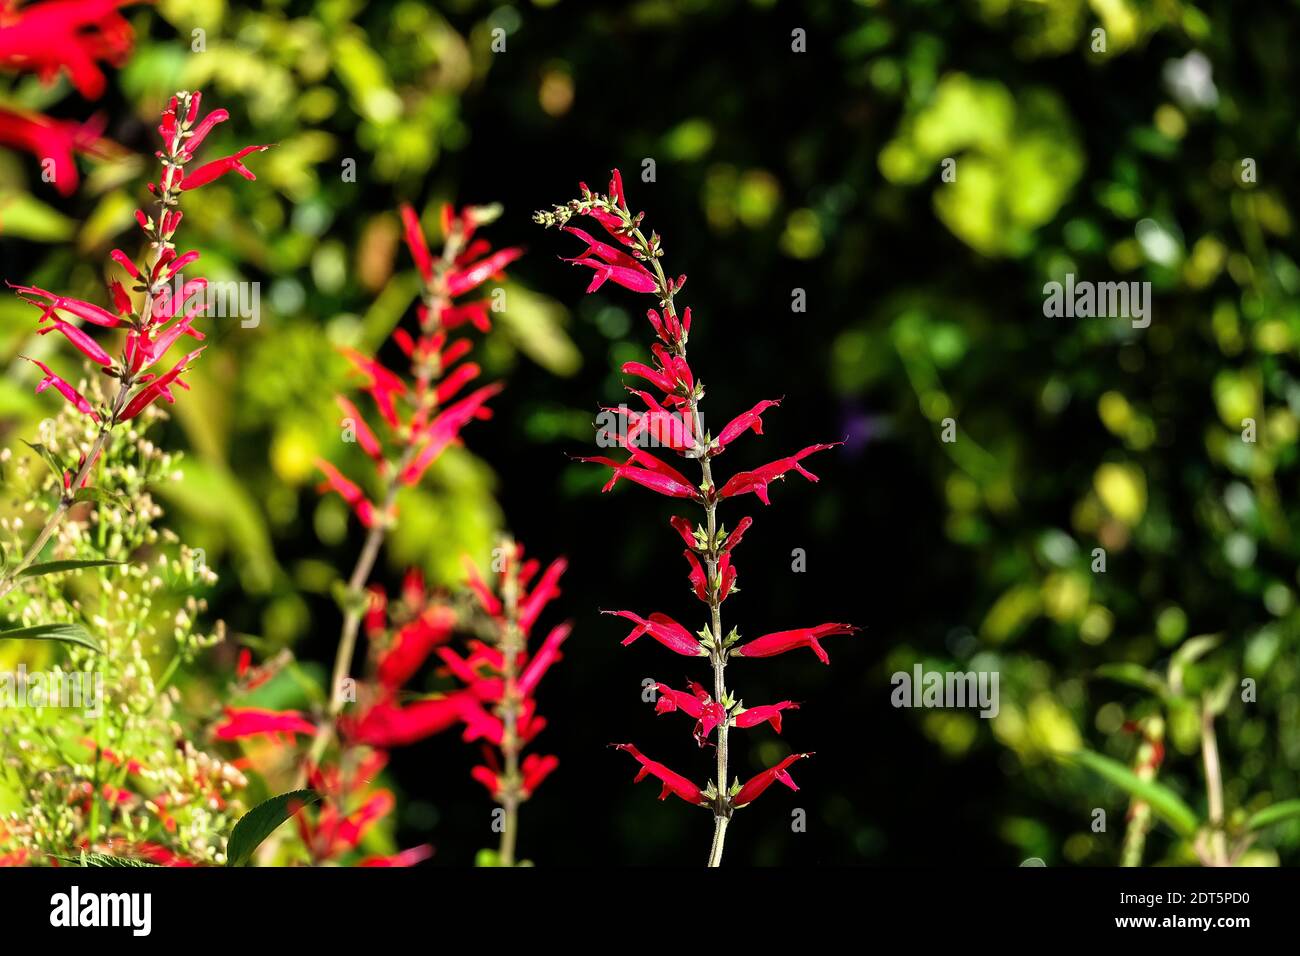 Flowers Of Pineapple Sage Or Tangerine Sage, Salvia Elegans, Nice Bokeh In Background Stock Photo